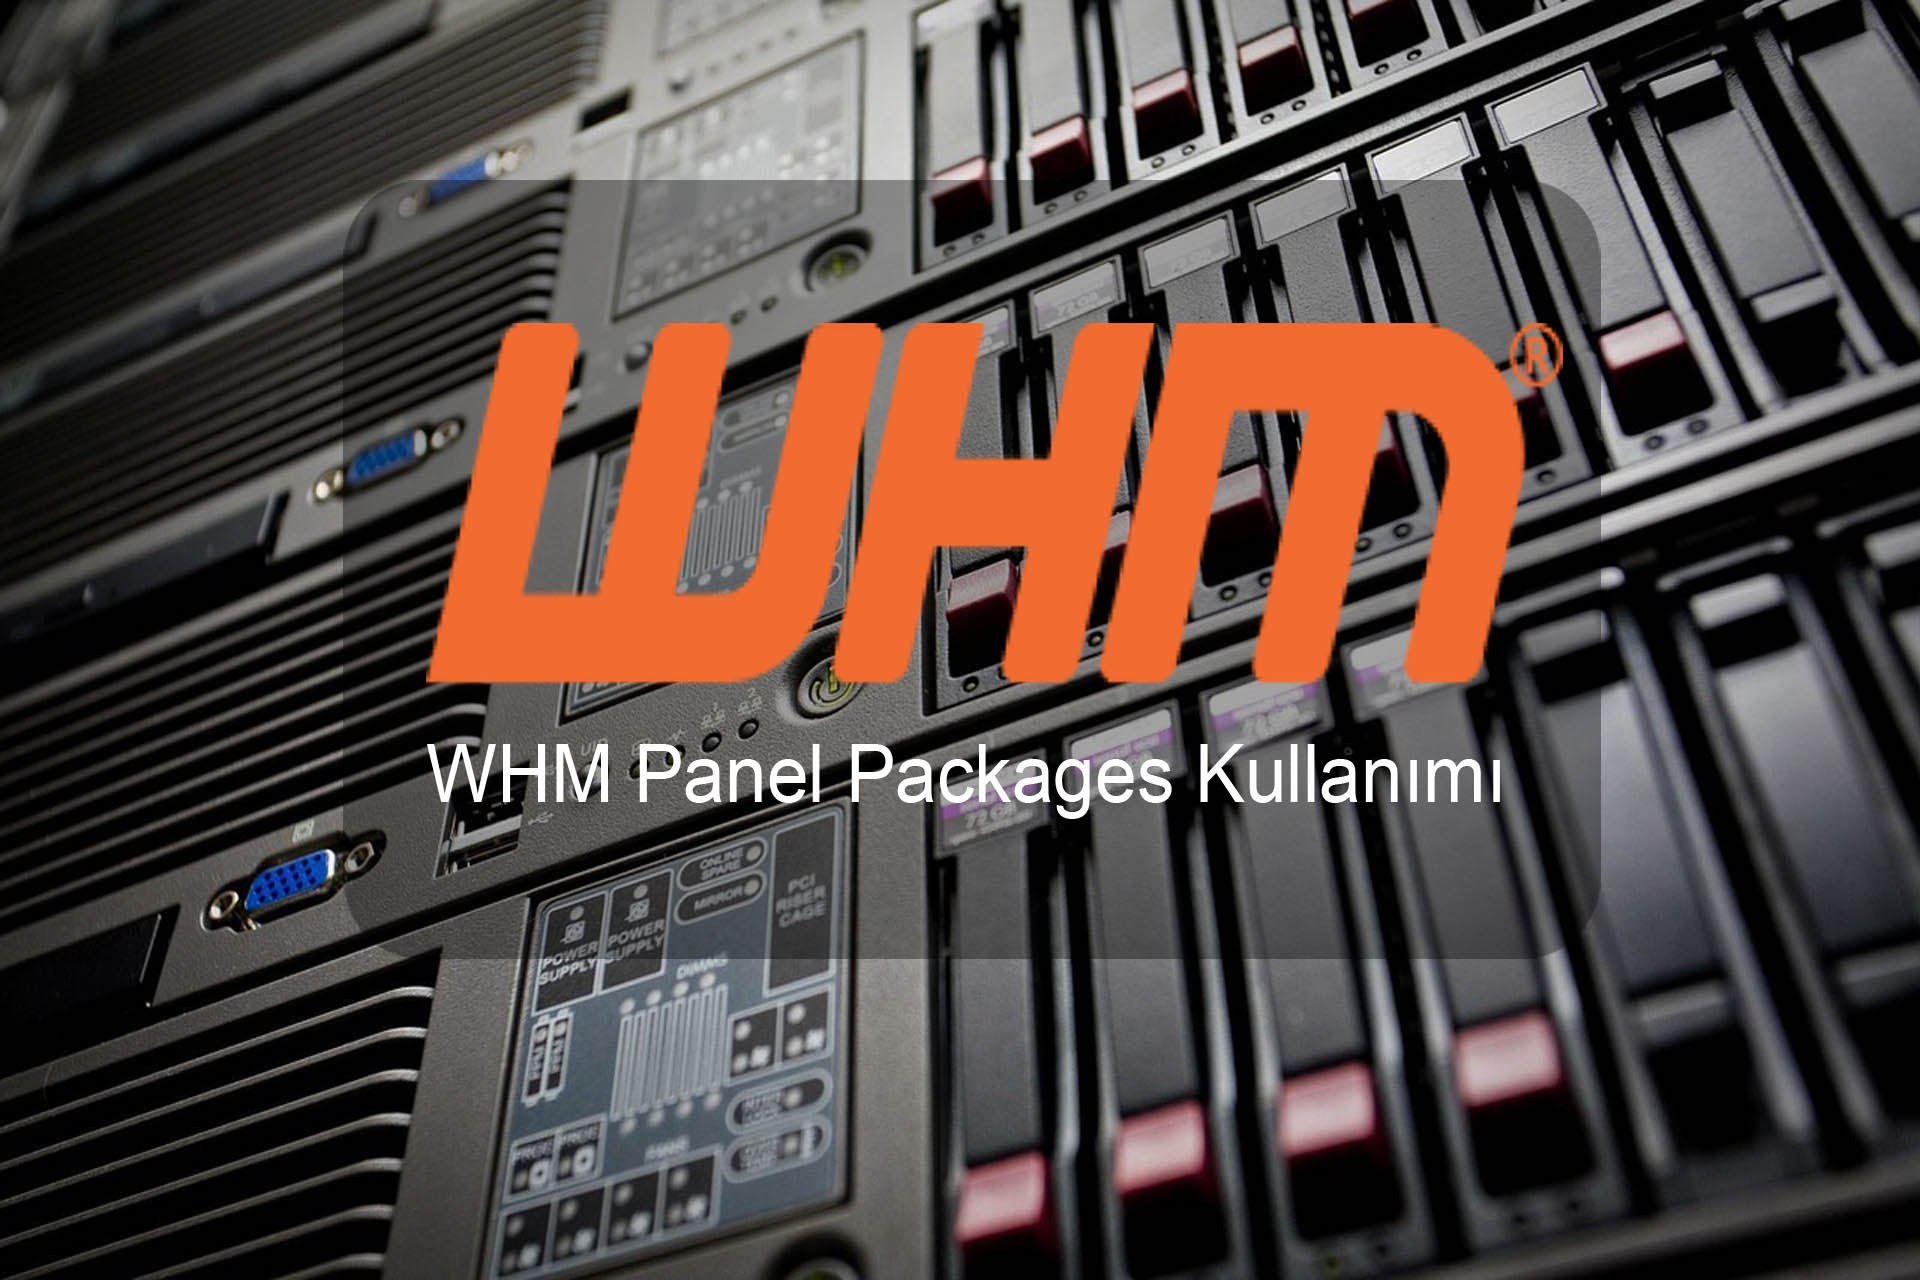 WHM Panel Packages Kullanımı